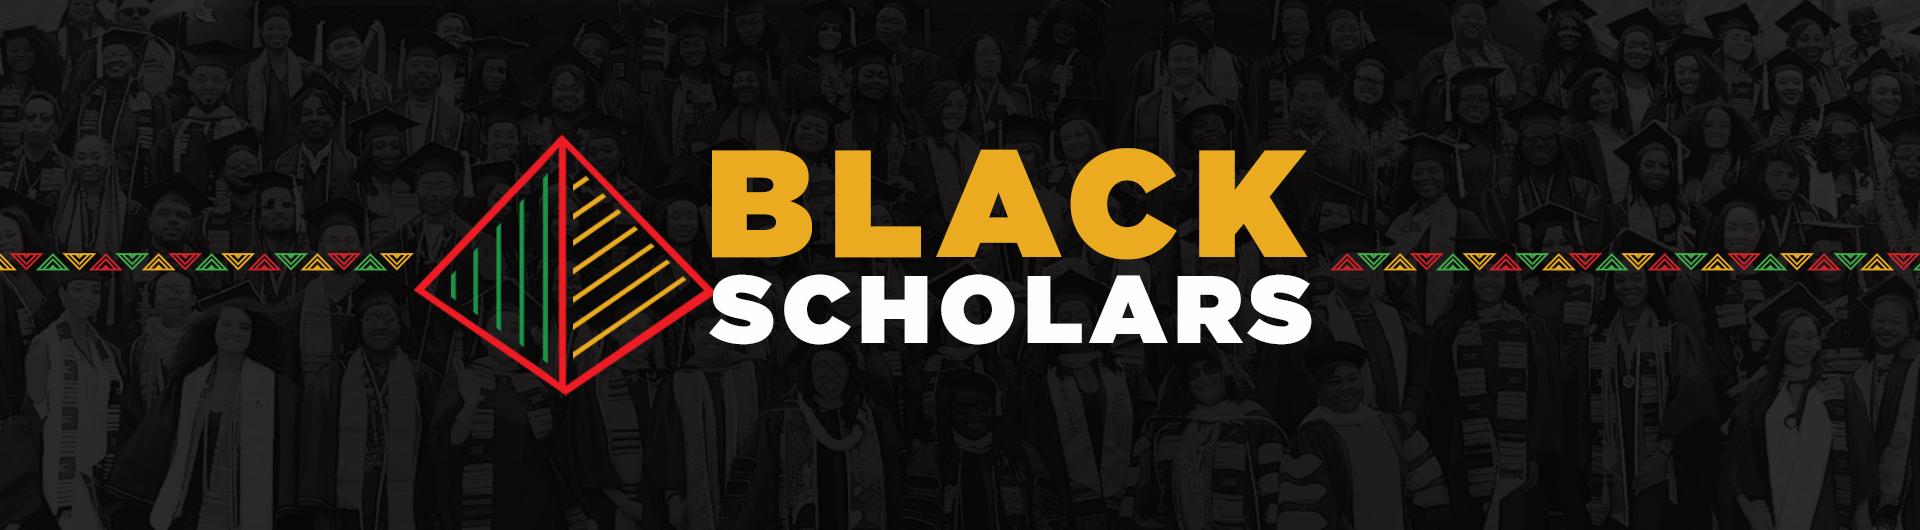 Black Scholars Banner